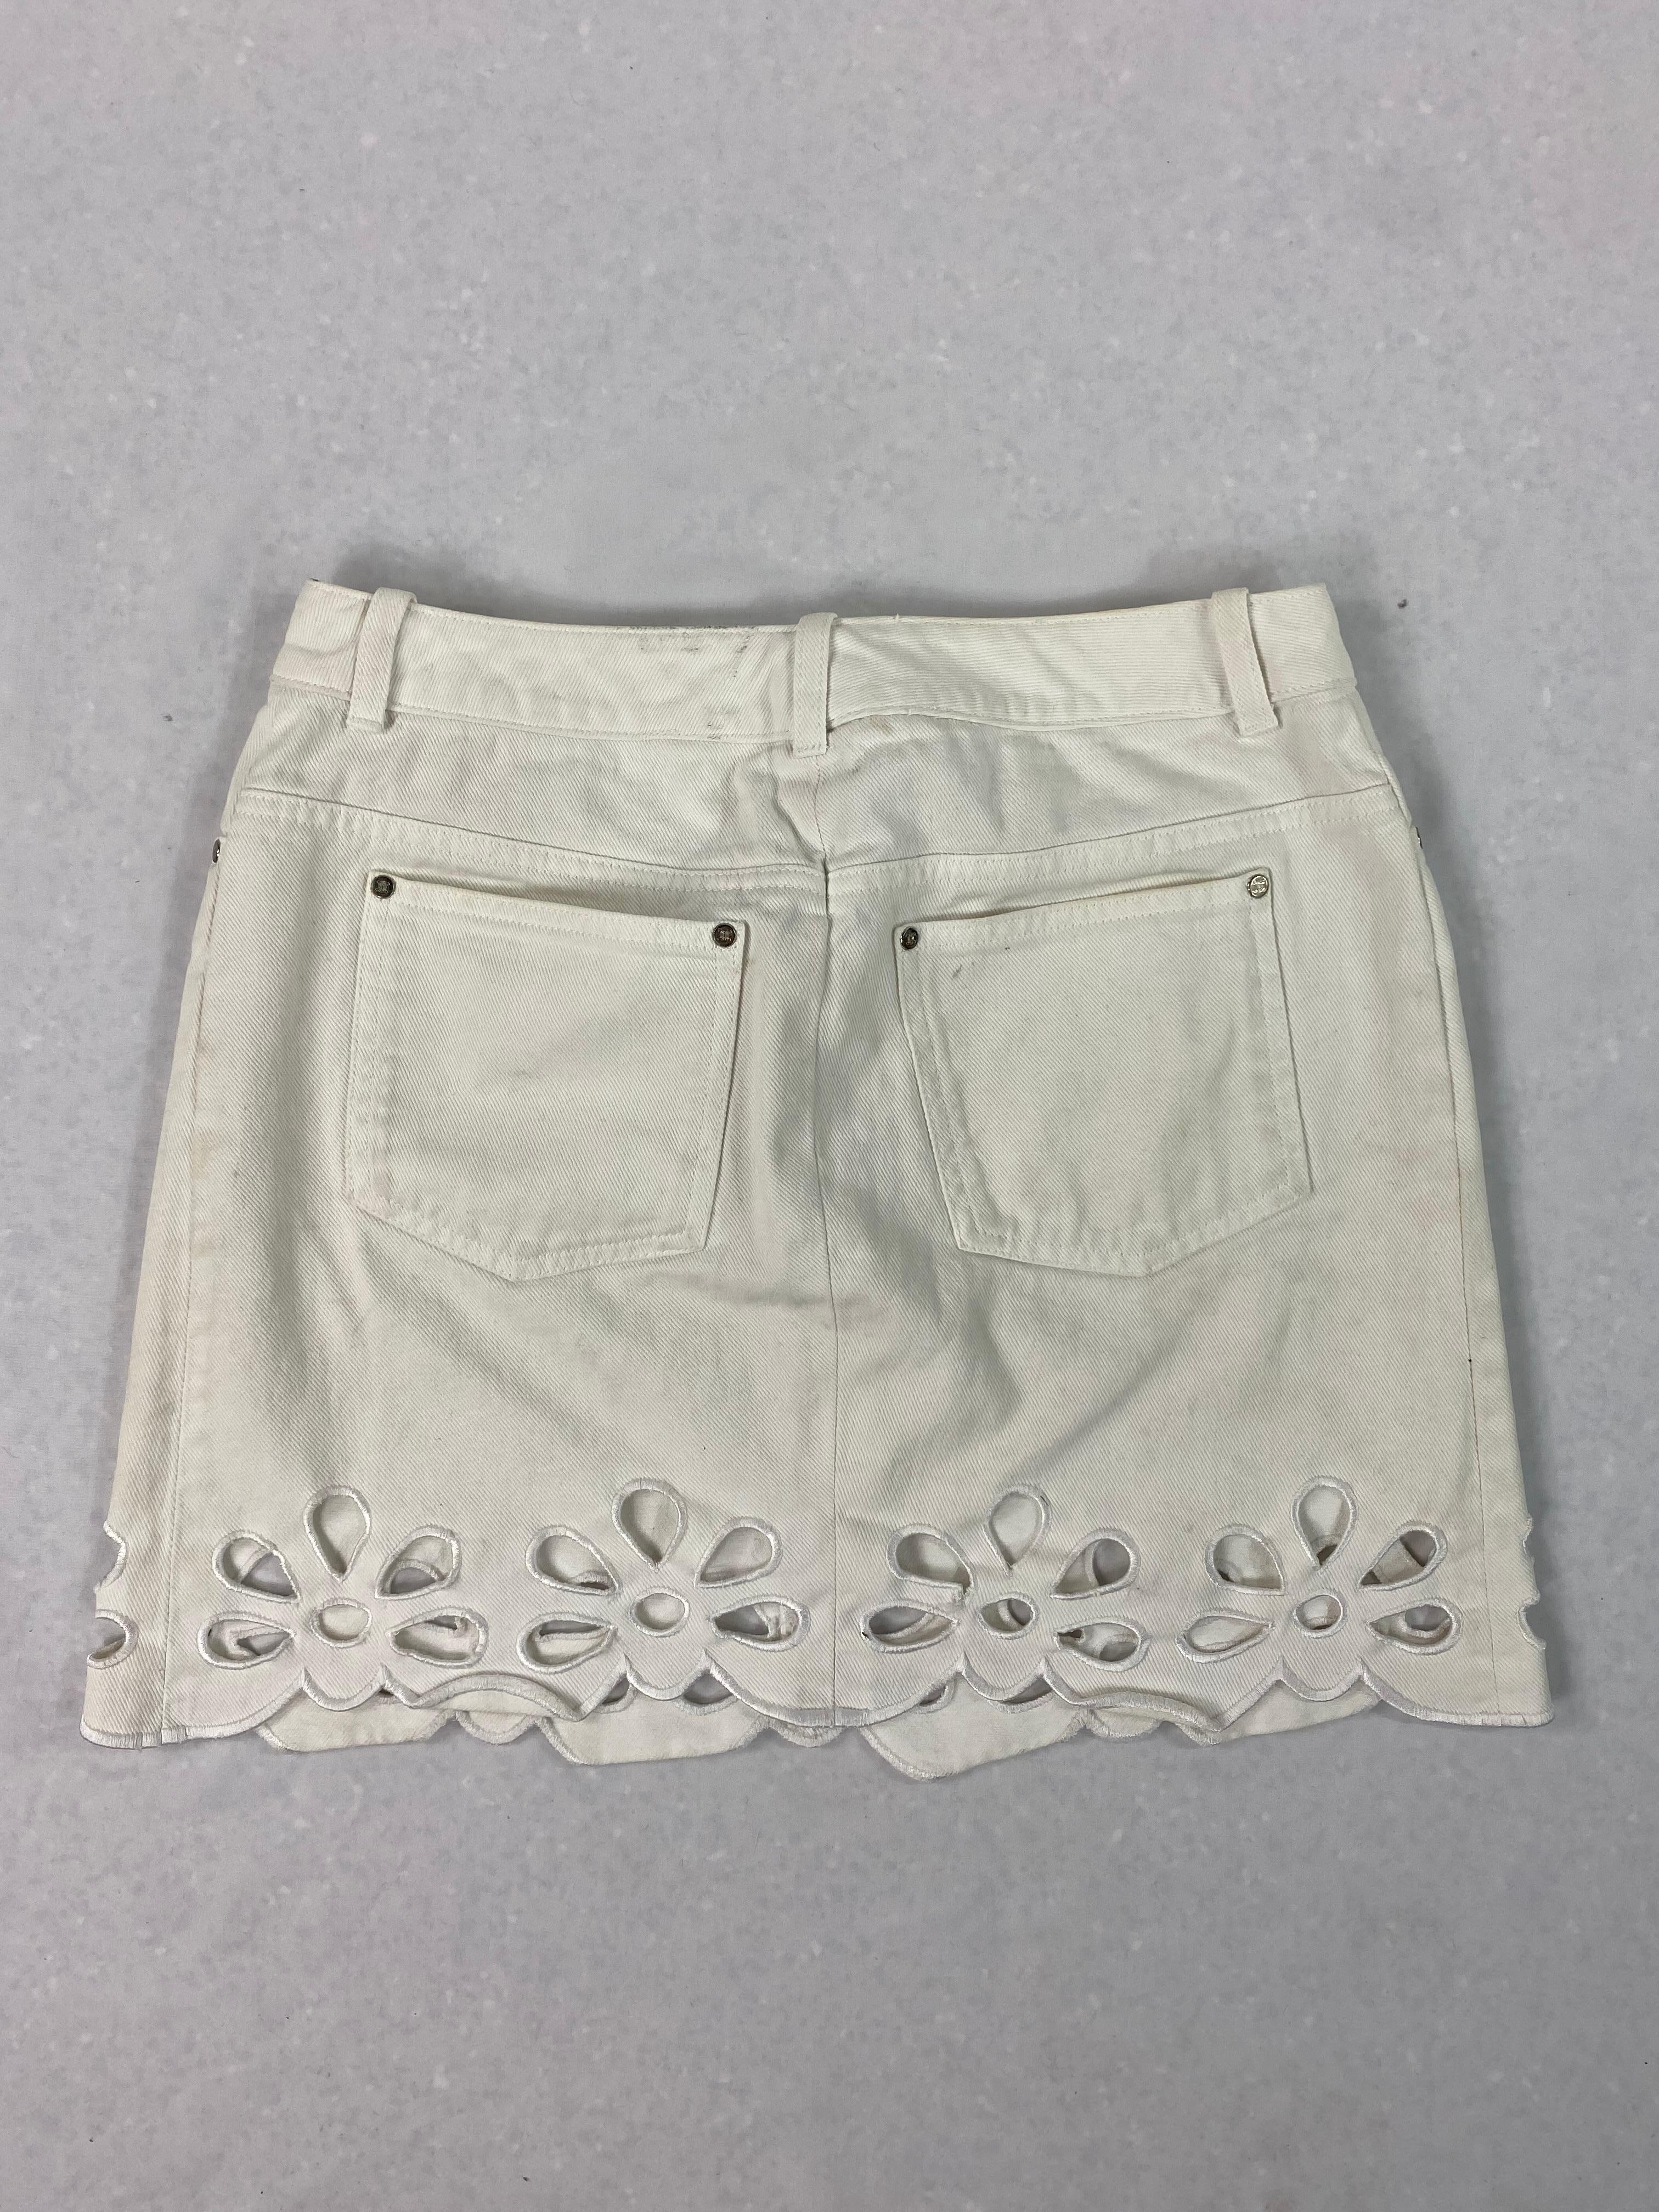 white jean mini skirt